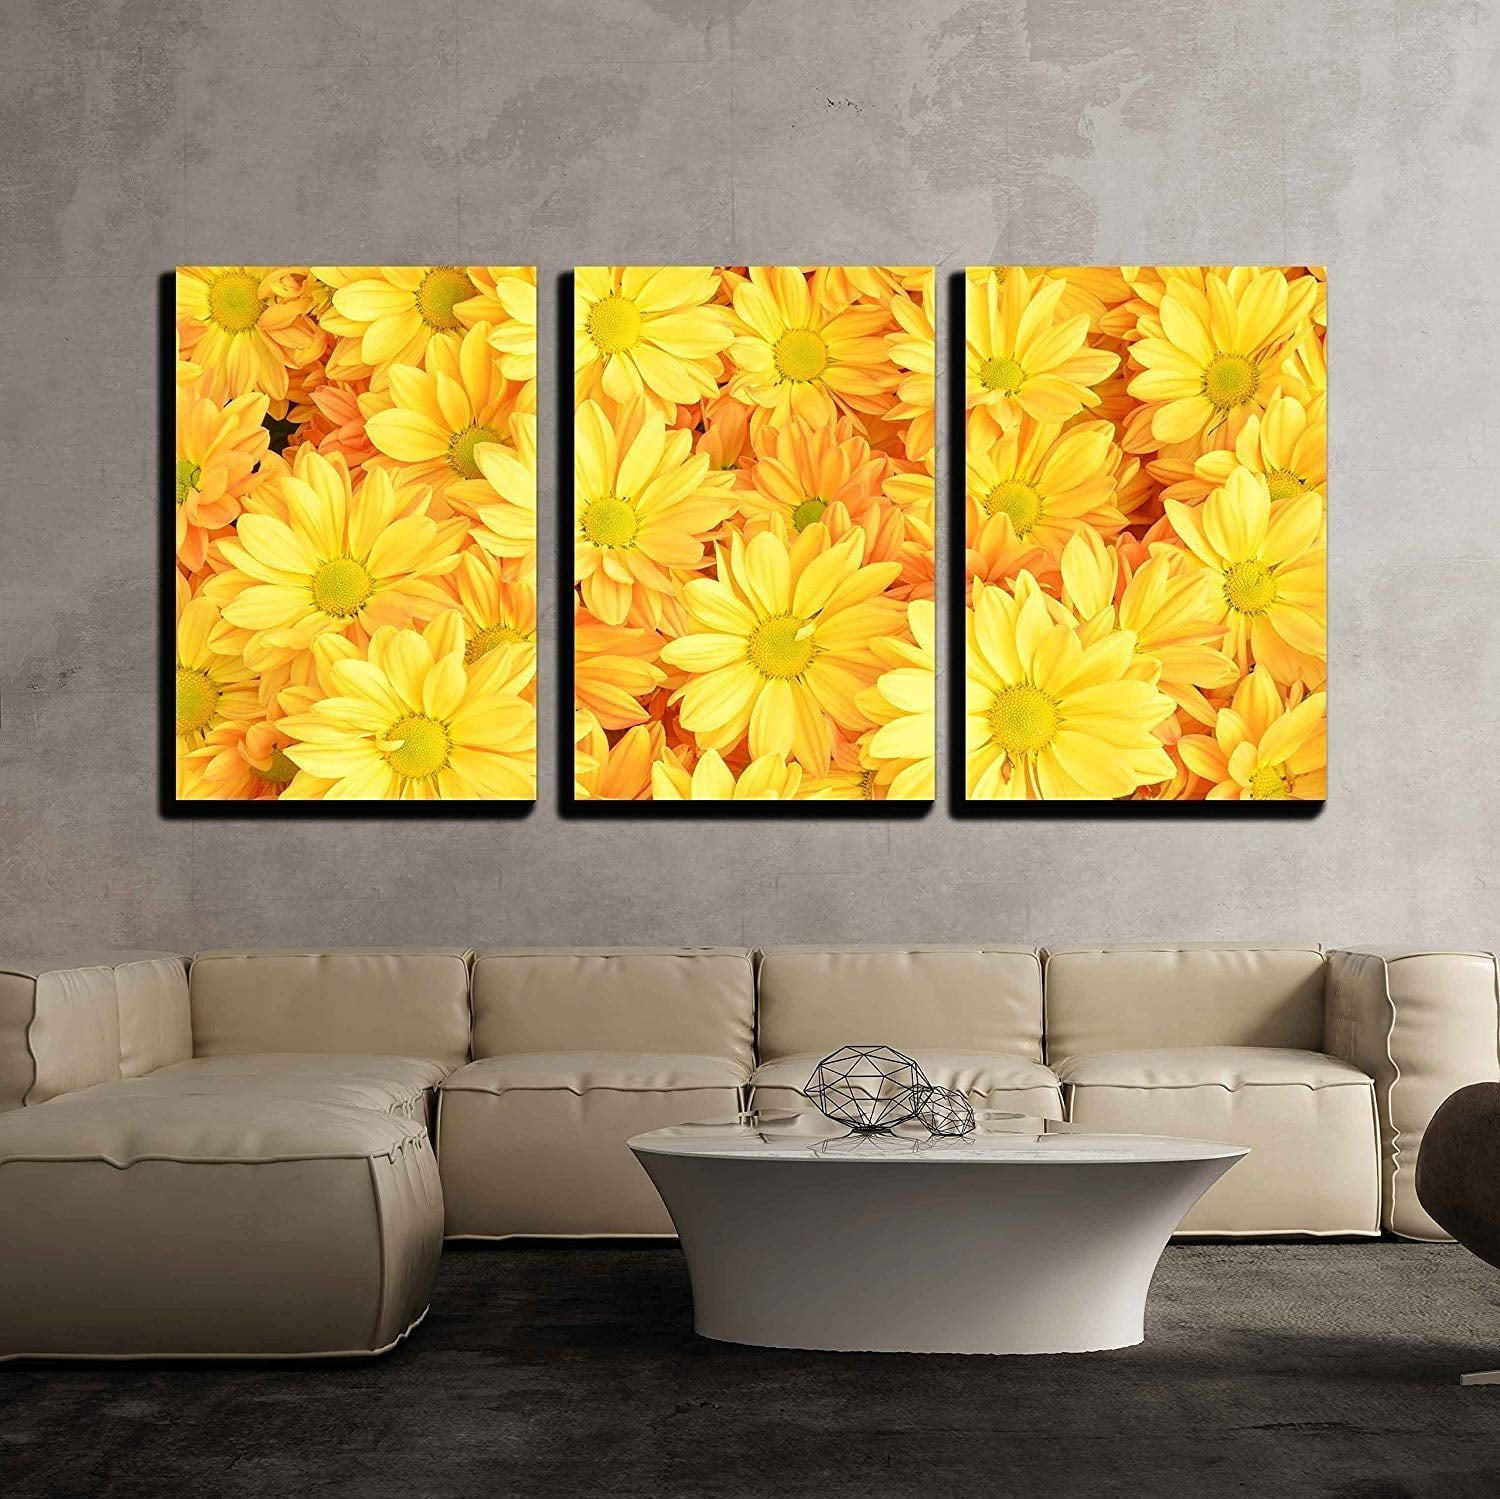 wall26 - 3 Piece Canvas Wall Art - Yellow Chrysanthemum Flowers